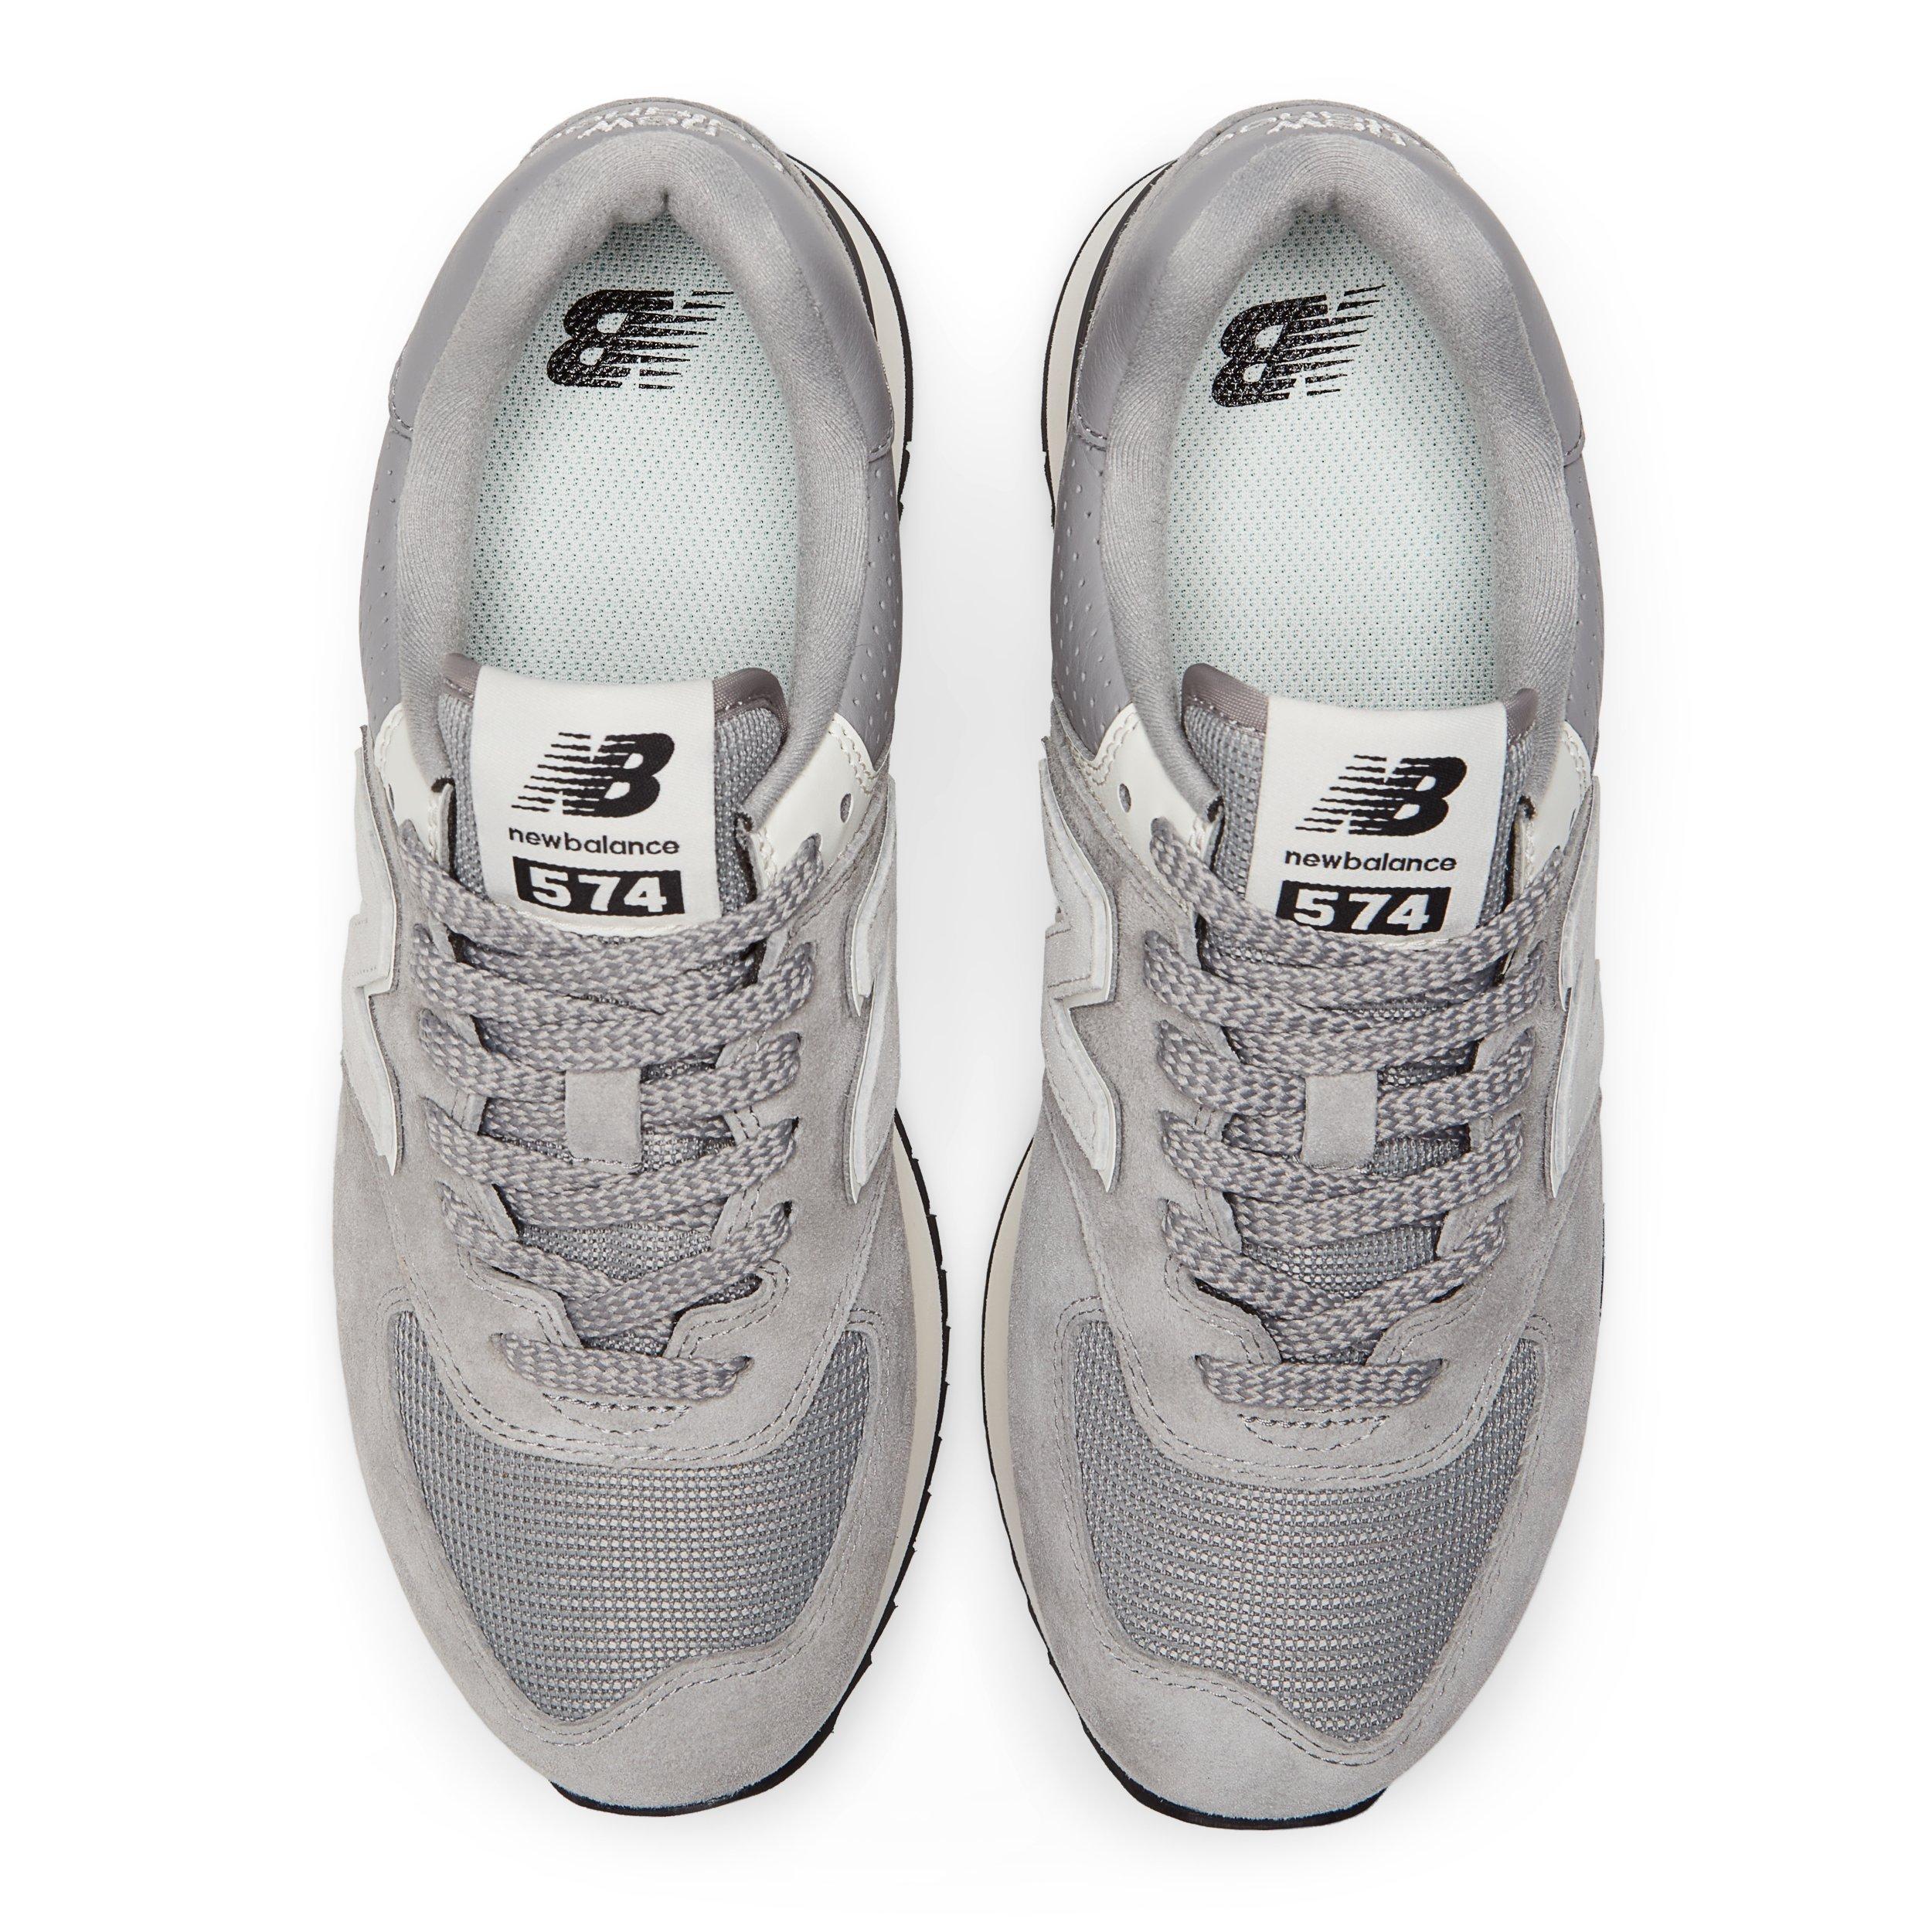 apetito estafa auditoría New Balance 574 Stacked "Grey/White" Women's Shoe